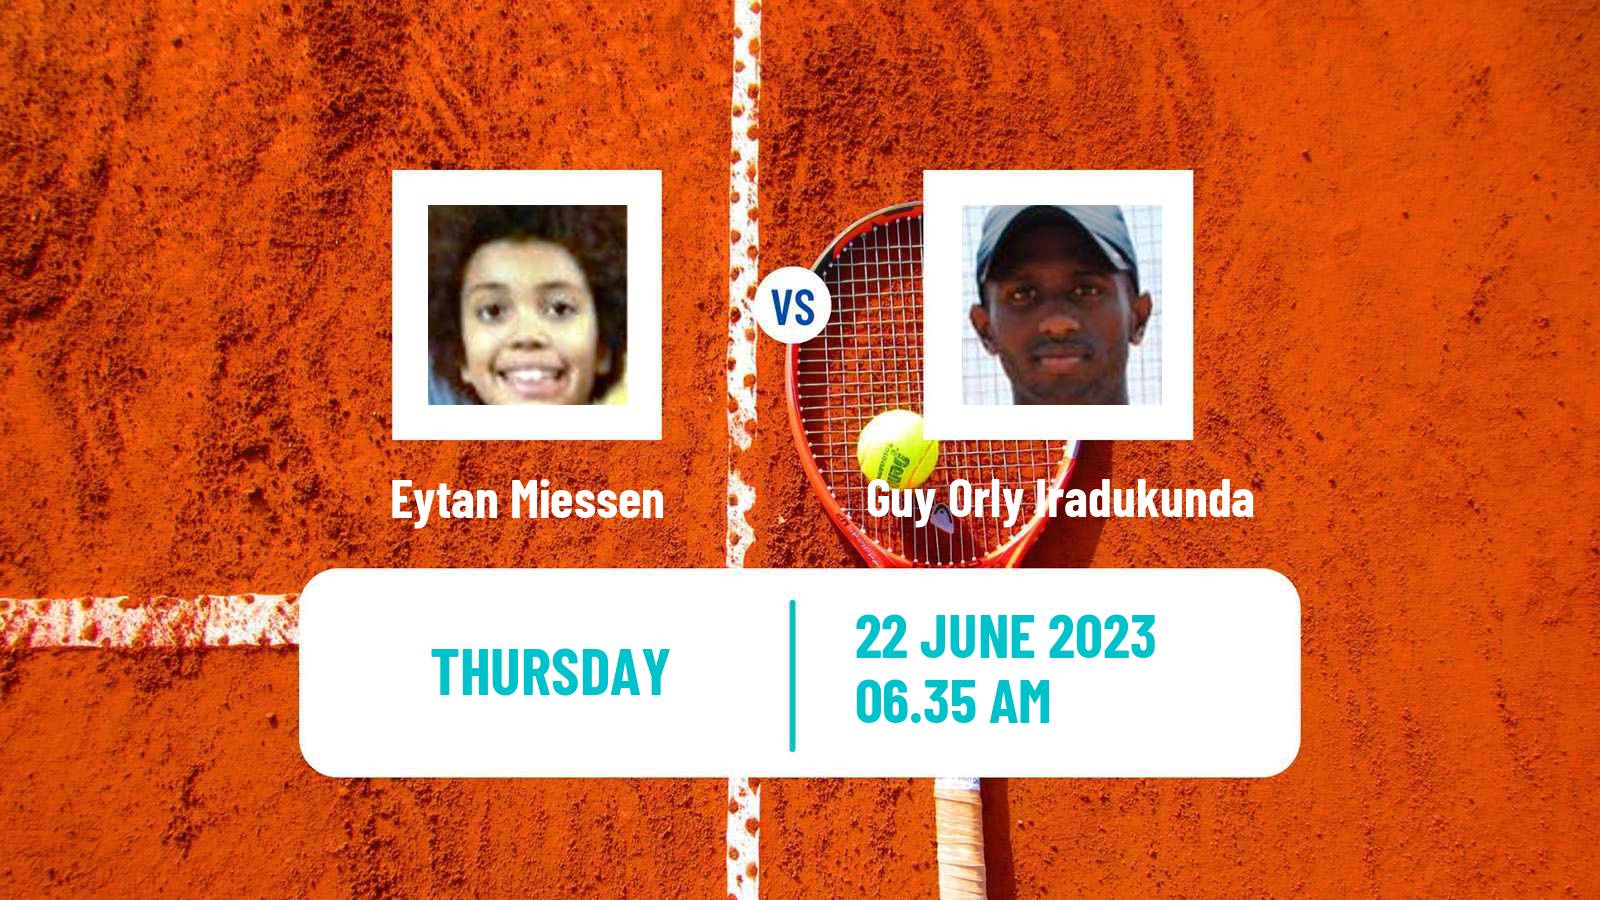 Tennis Davis Cup Group V Eytan Miessen - Guy Orly Iradukunda